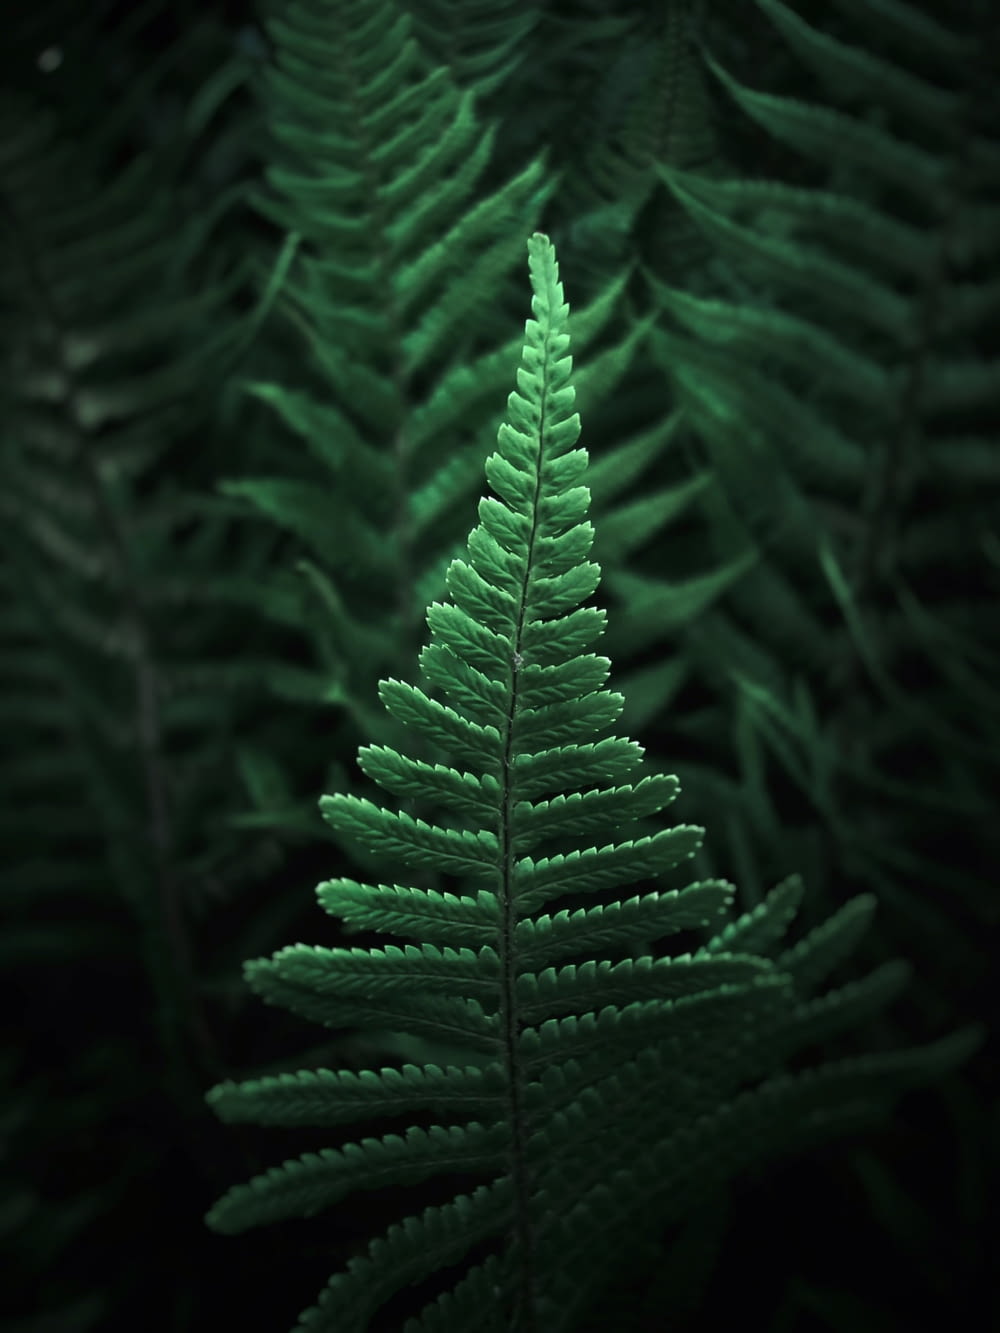 a close up of a green fern leaf